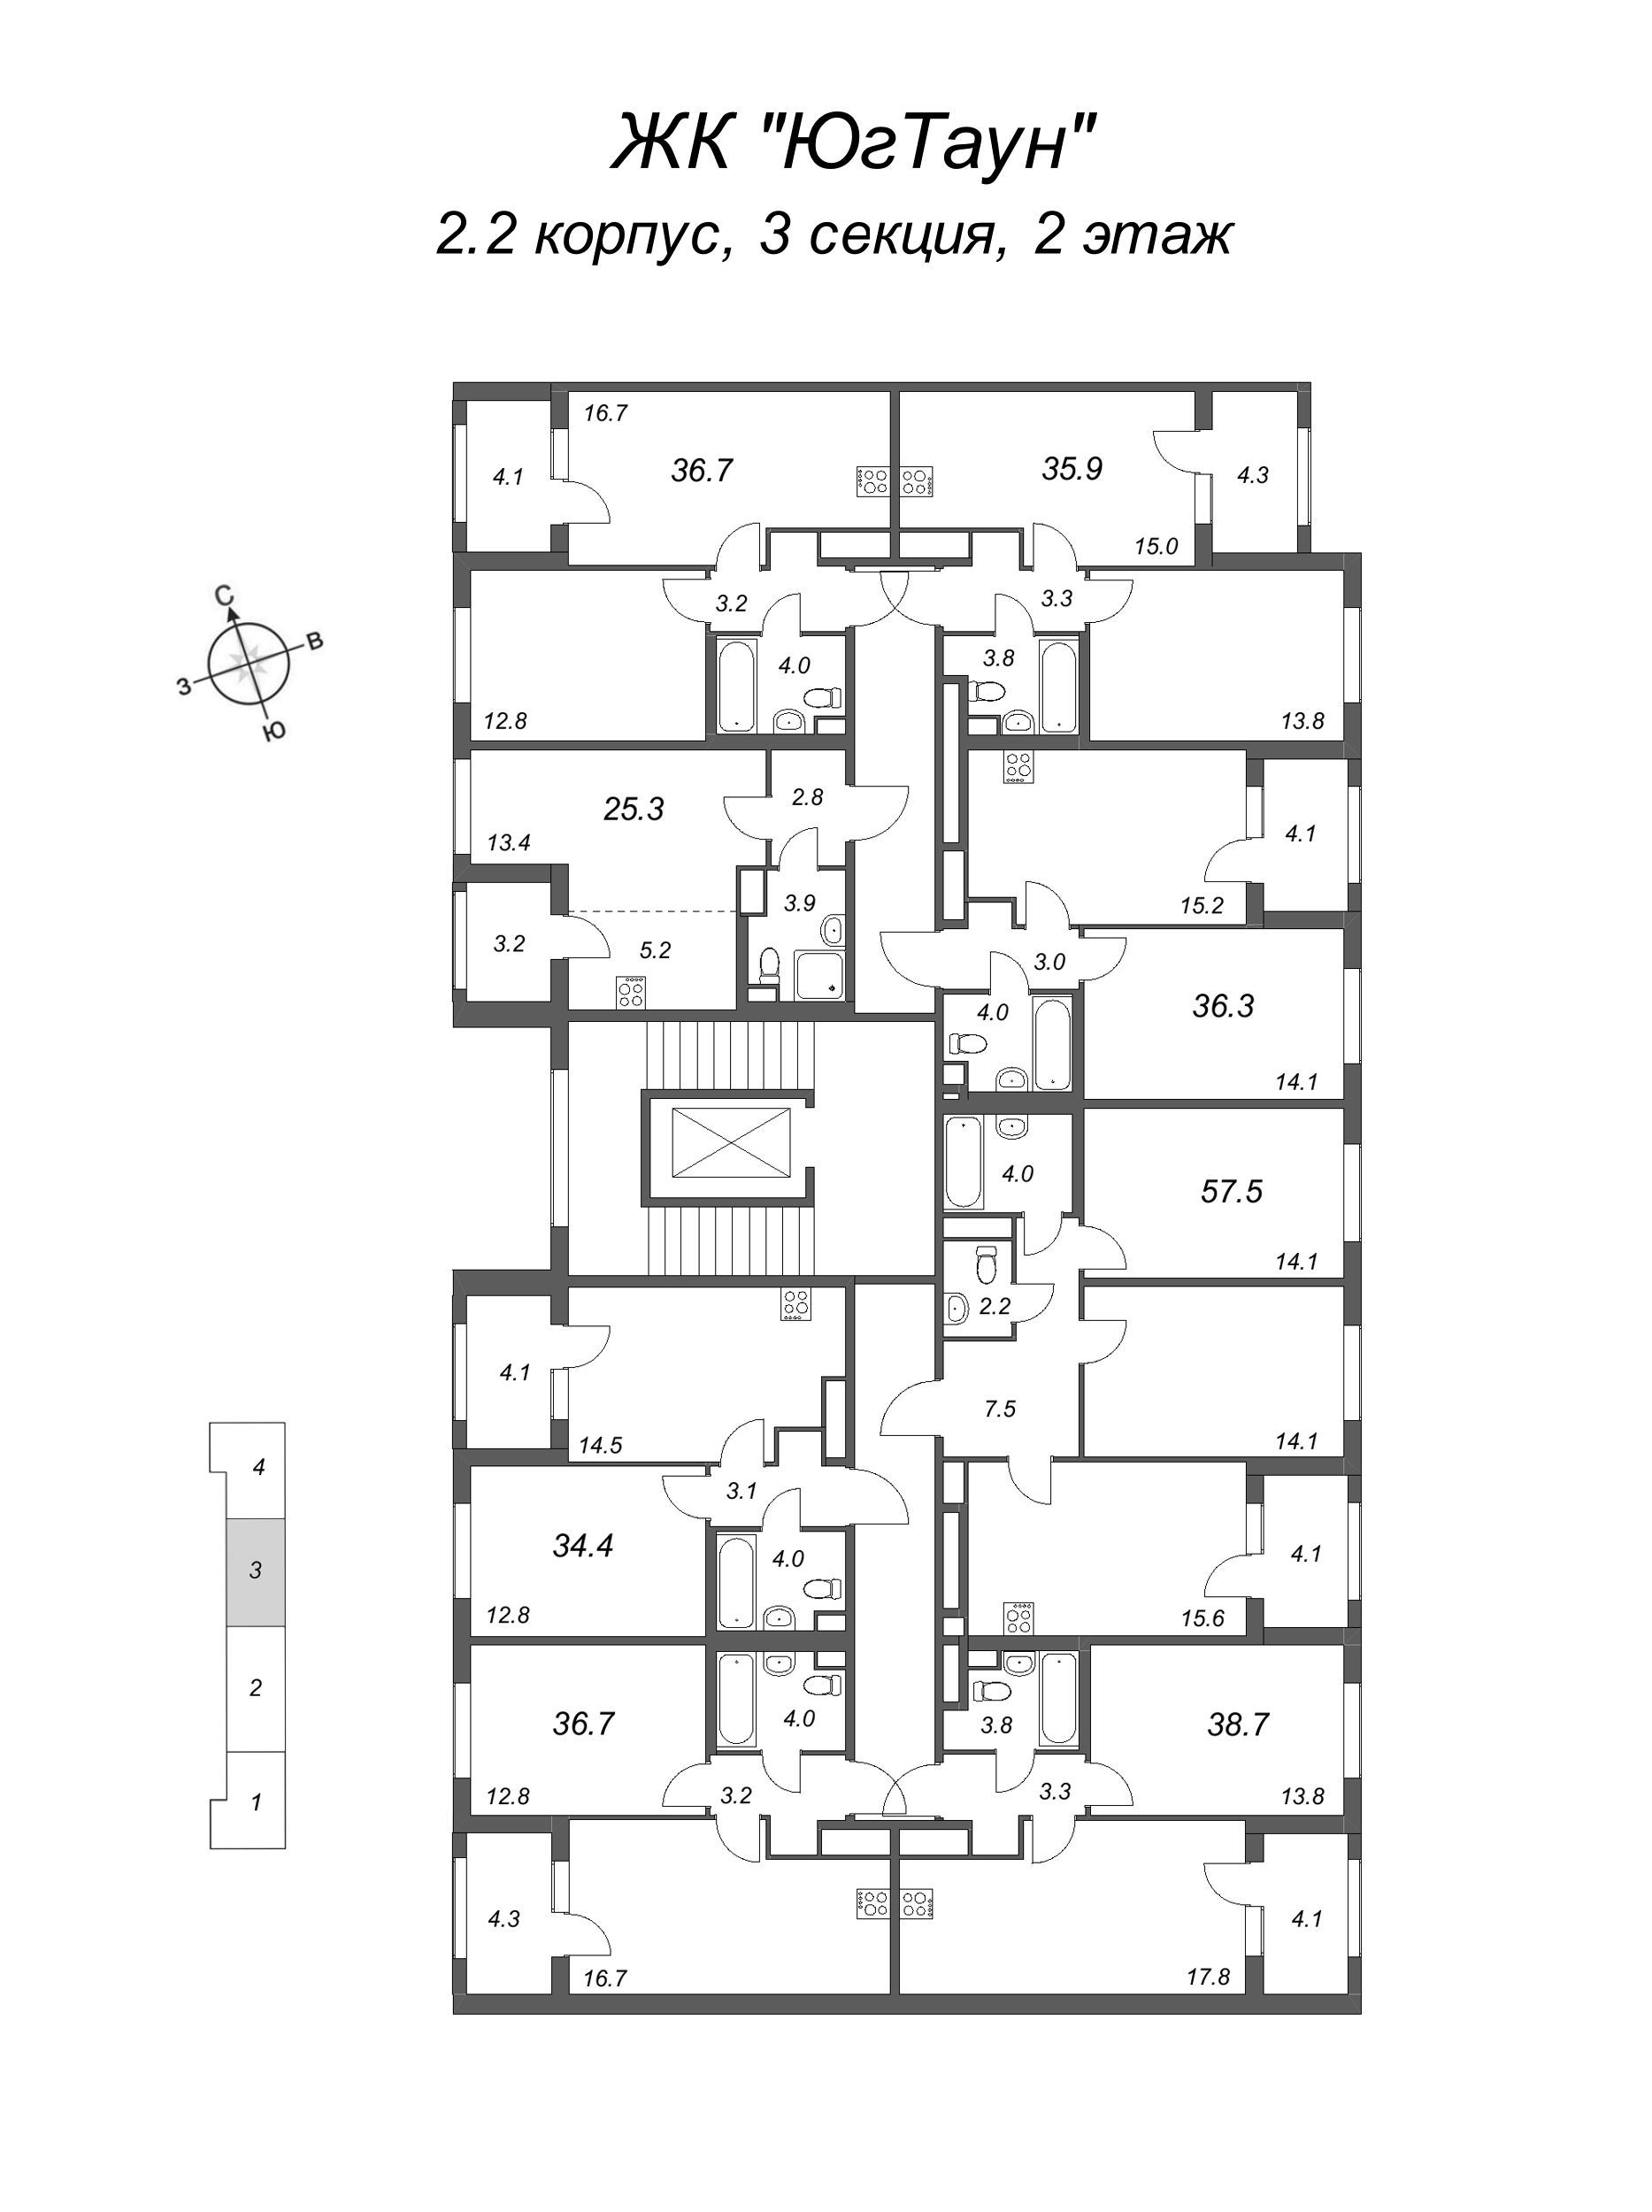 2-комнатная (Евро) квартира, 36.7 м² - планировка этажа